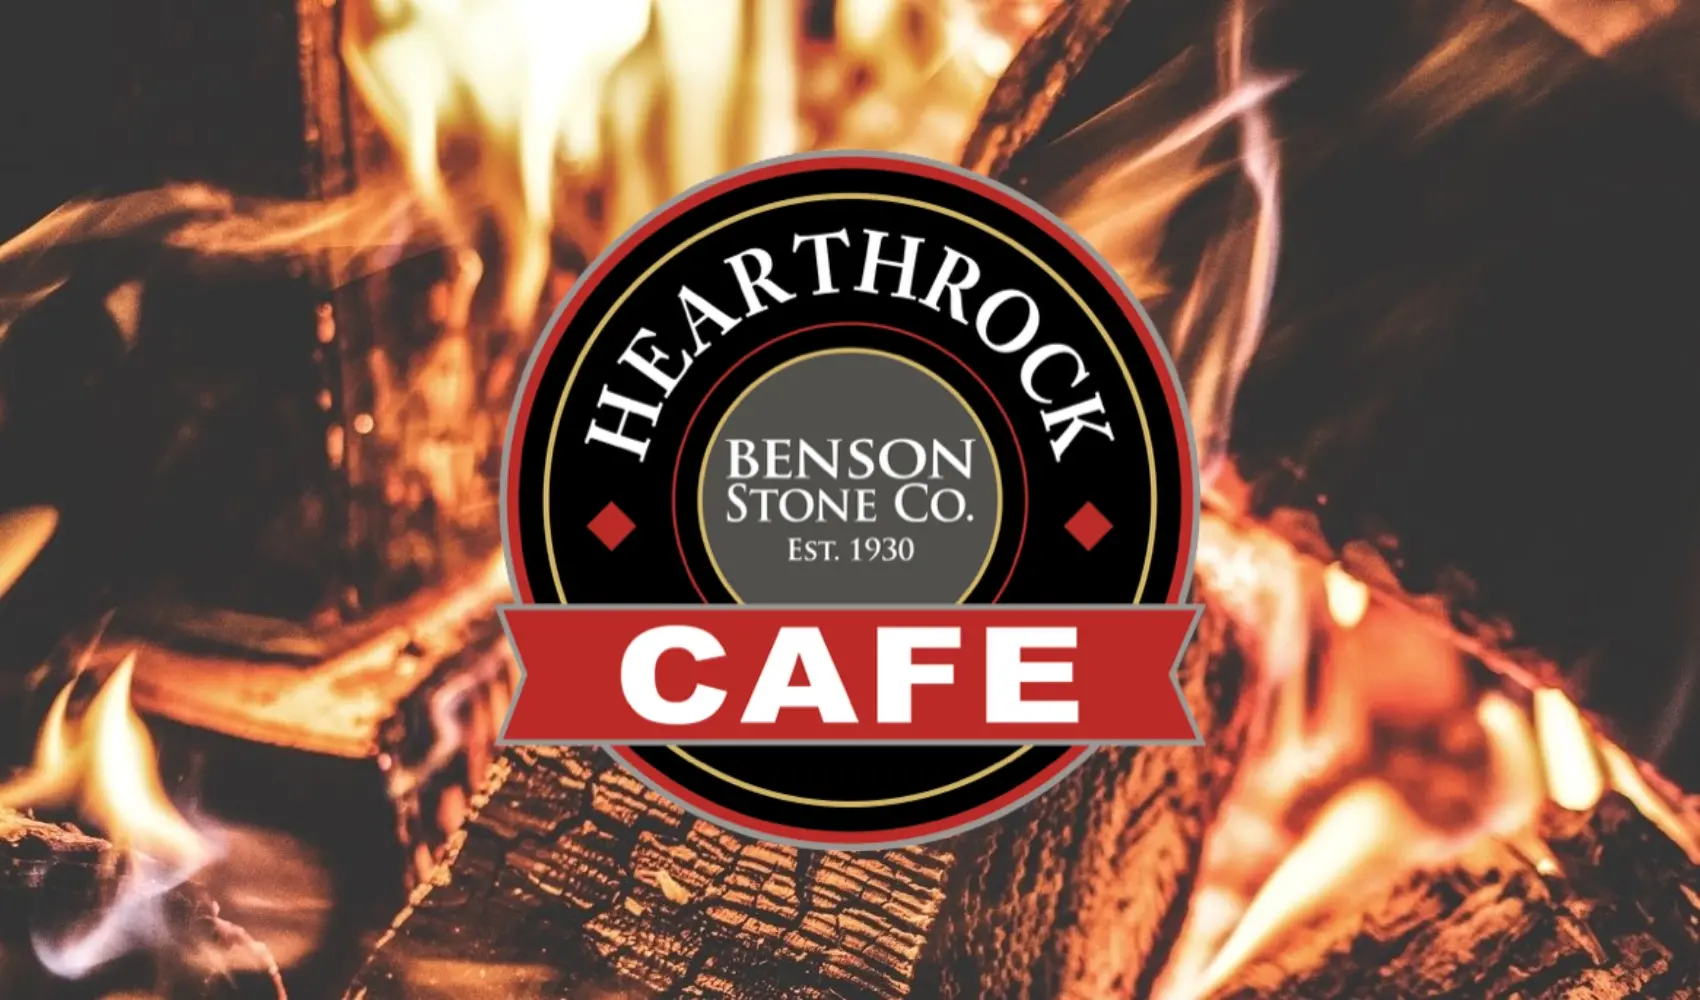 hearthrock cafe logo on fire image background